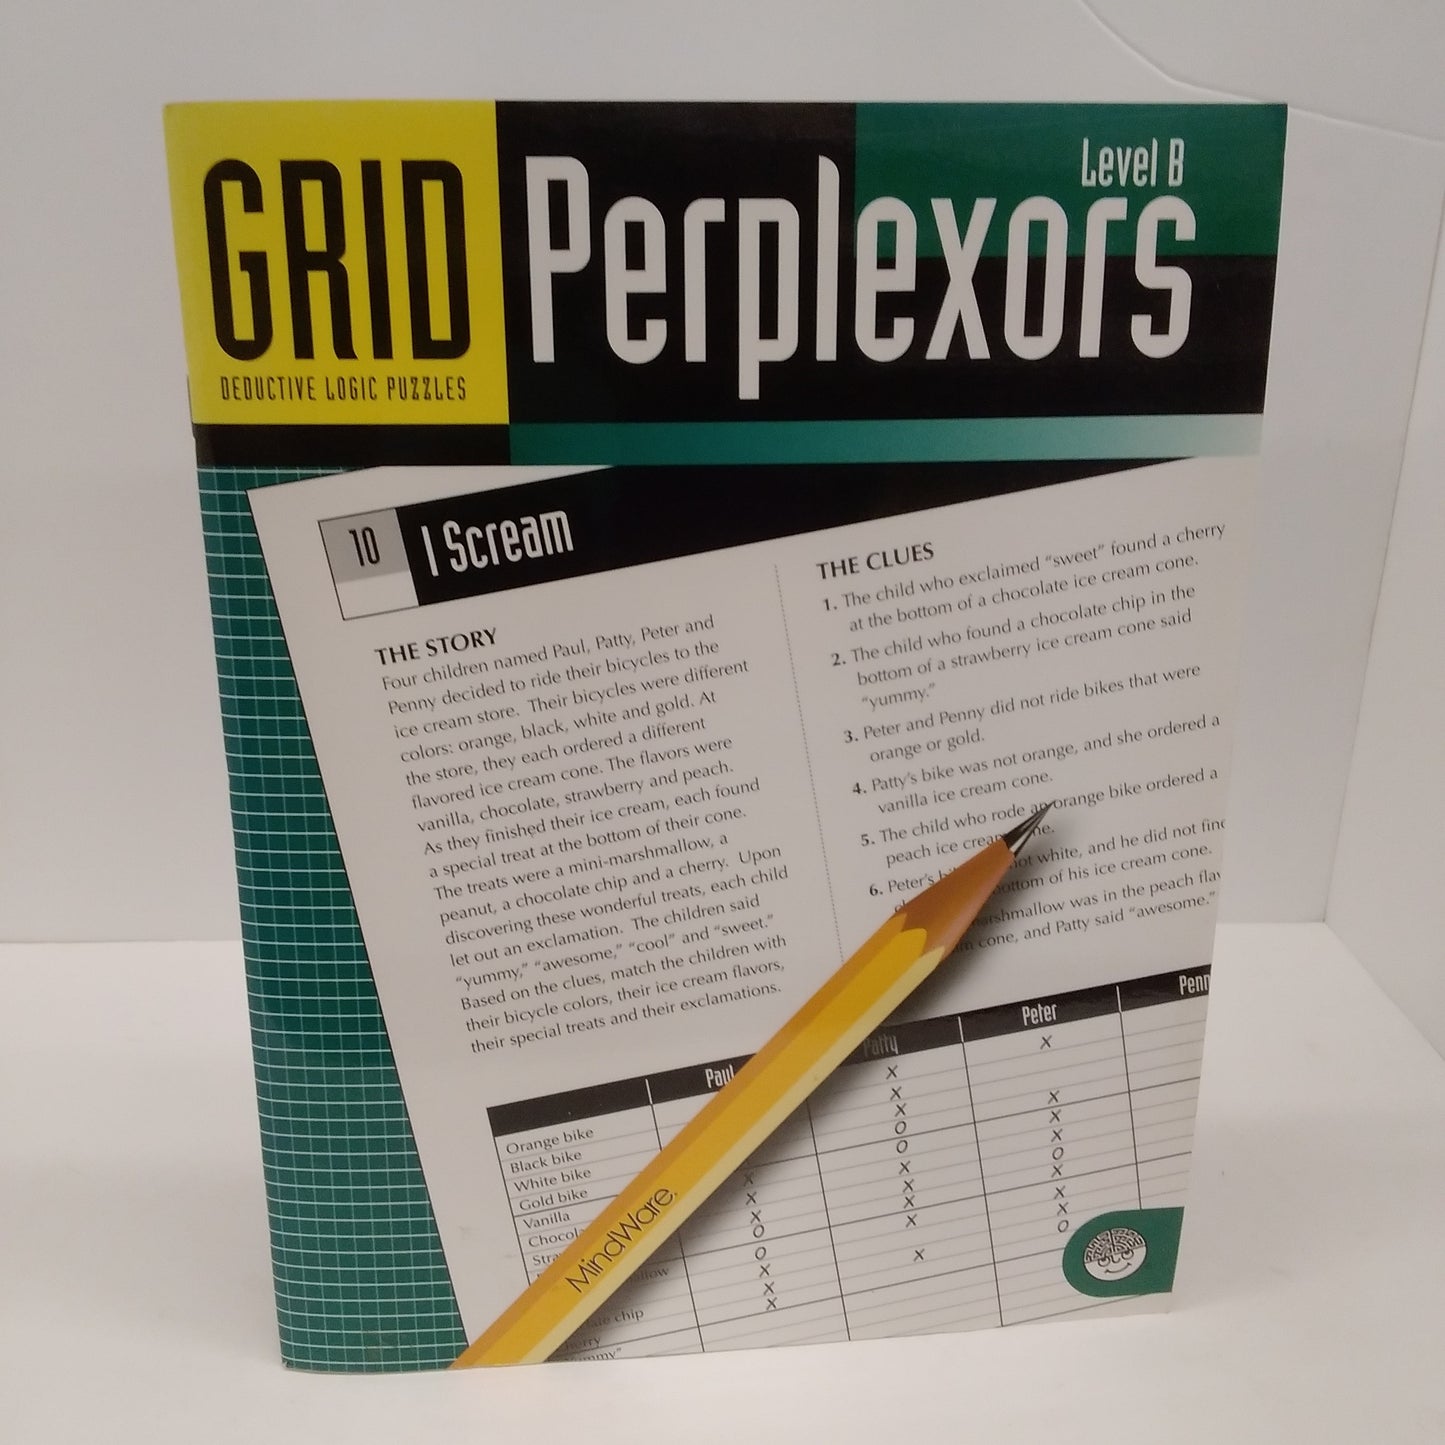 Grid-Perplexors level B